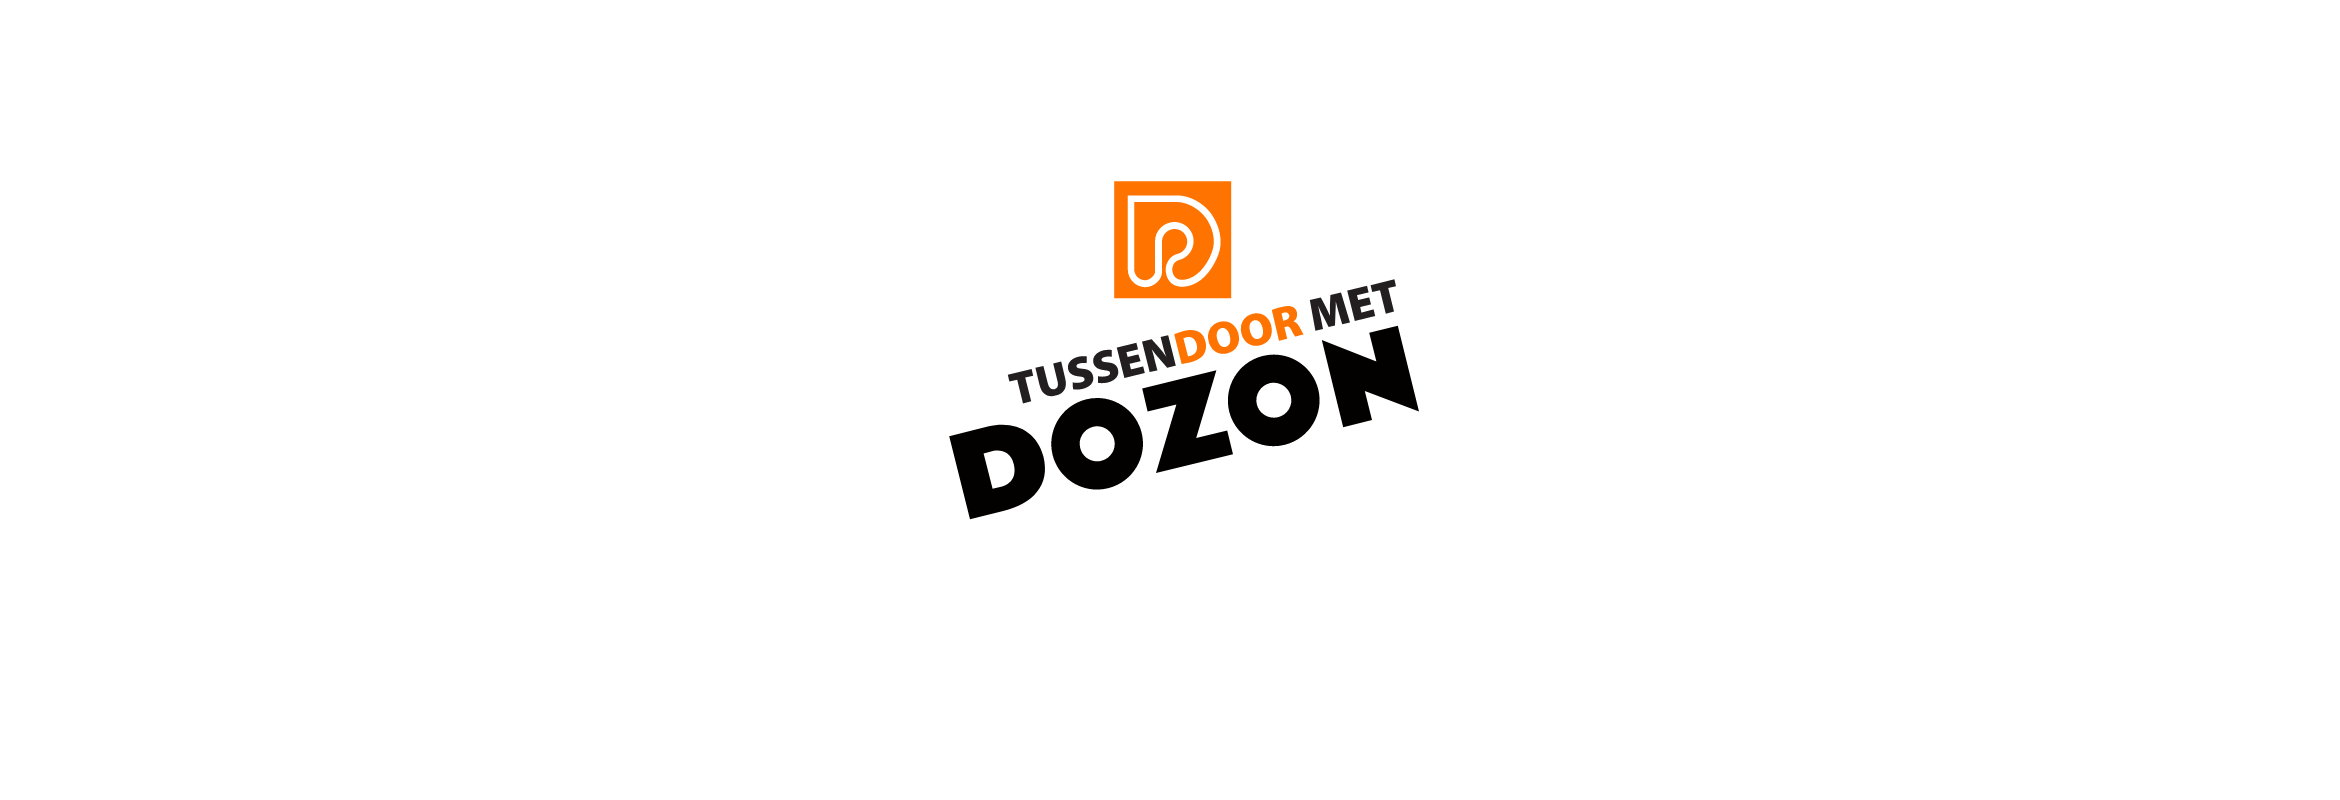 dozon-campagne-banner2x